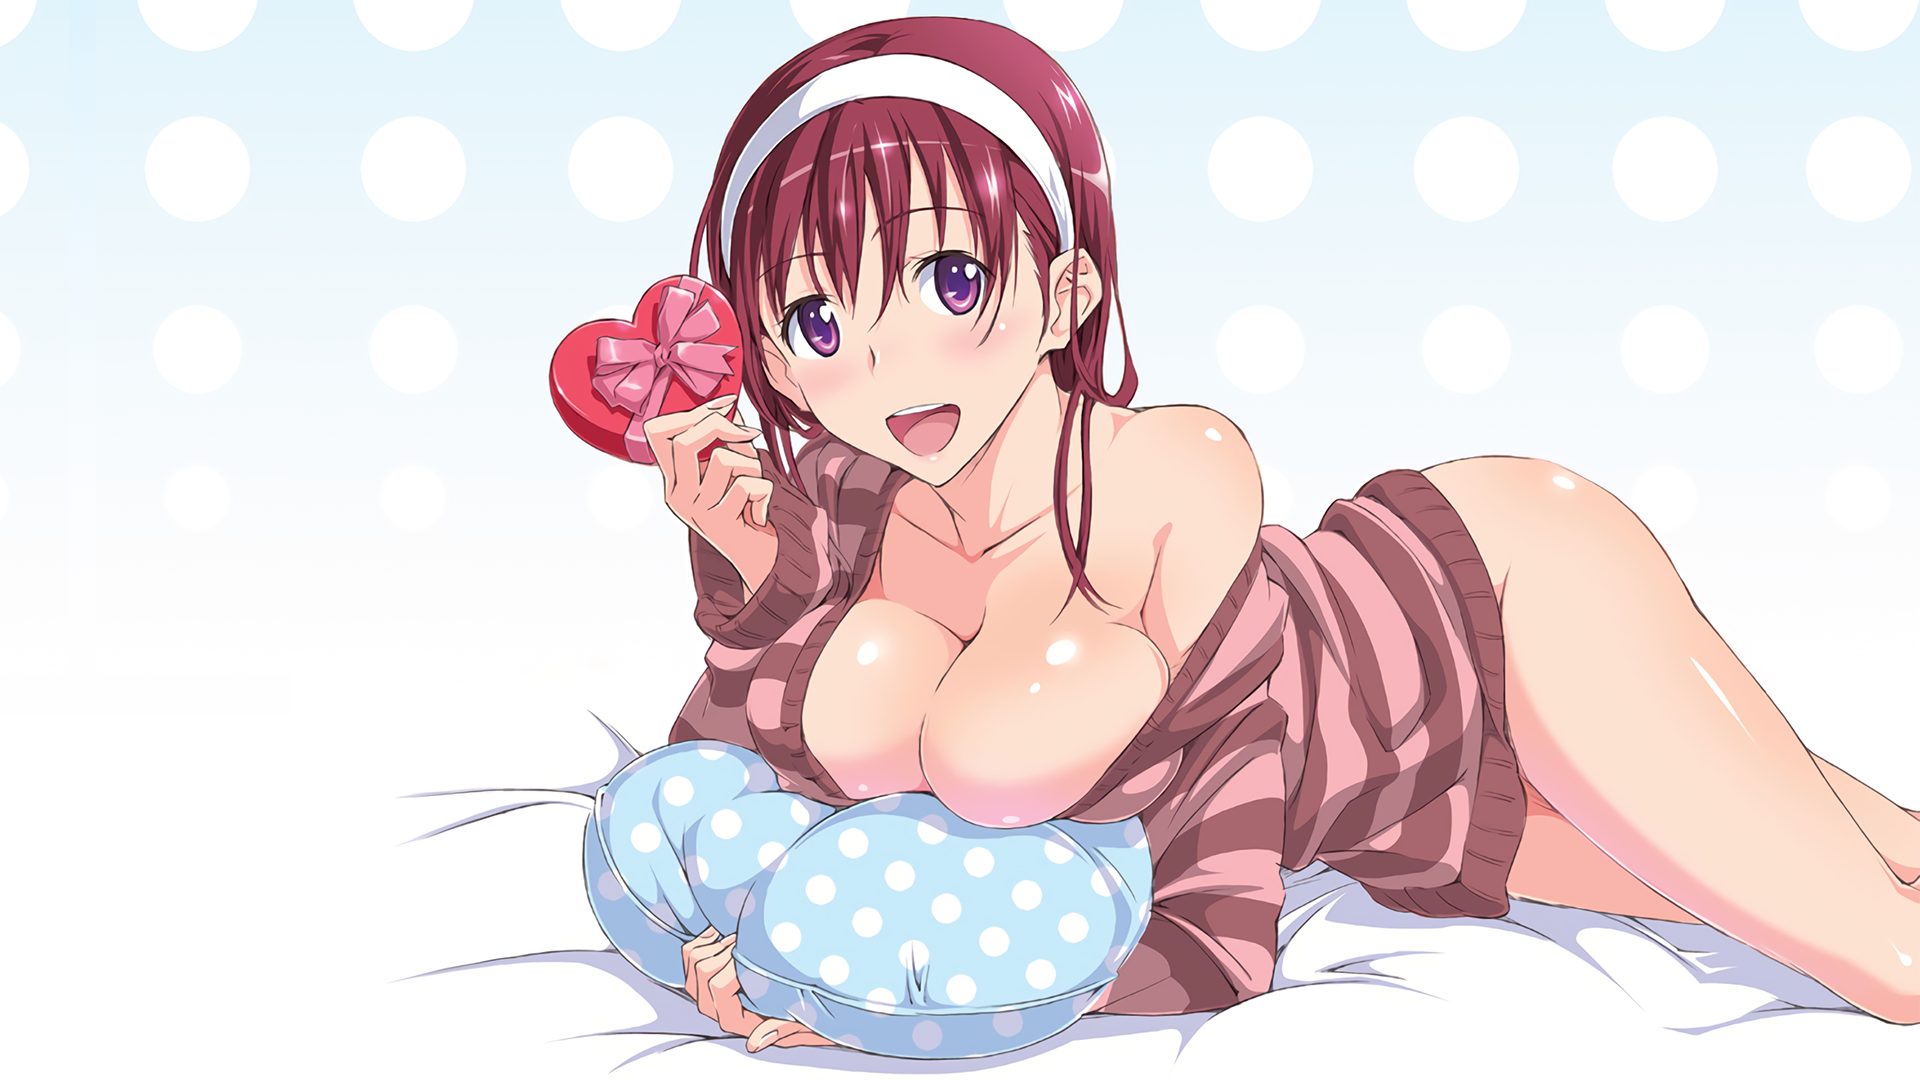 Anime 1920x1080 anime girls big boobs purple eyes bottomless no bra cleavage in bed pillow hug Valentine's Day Suzutsuki Kurara lying on front